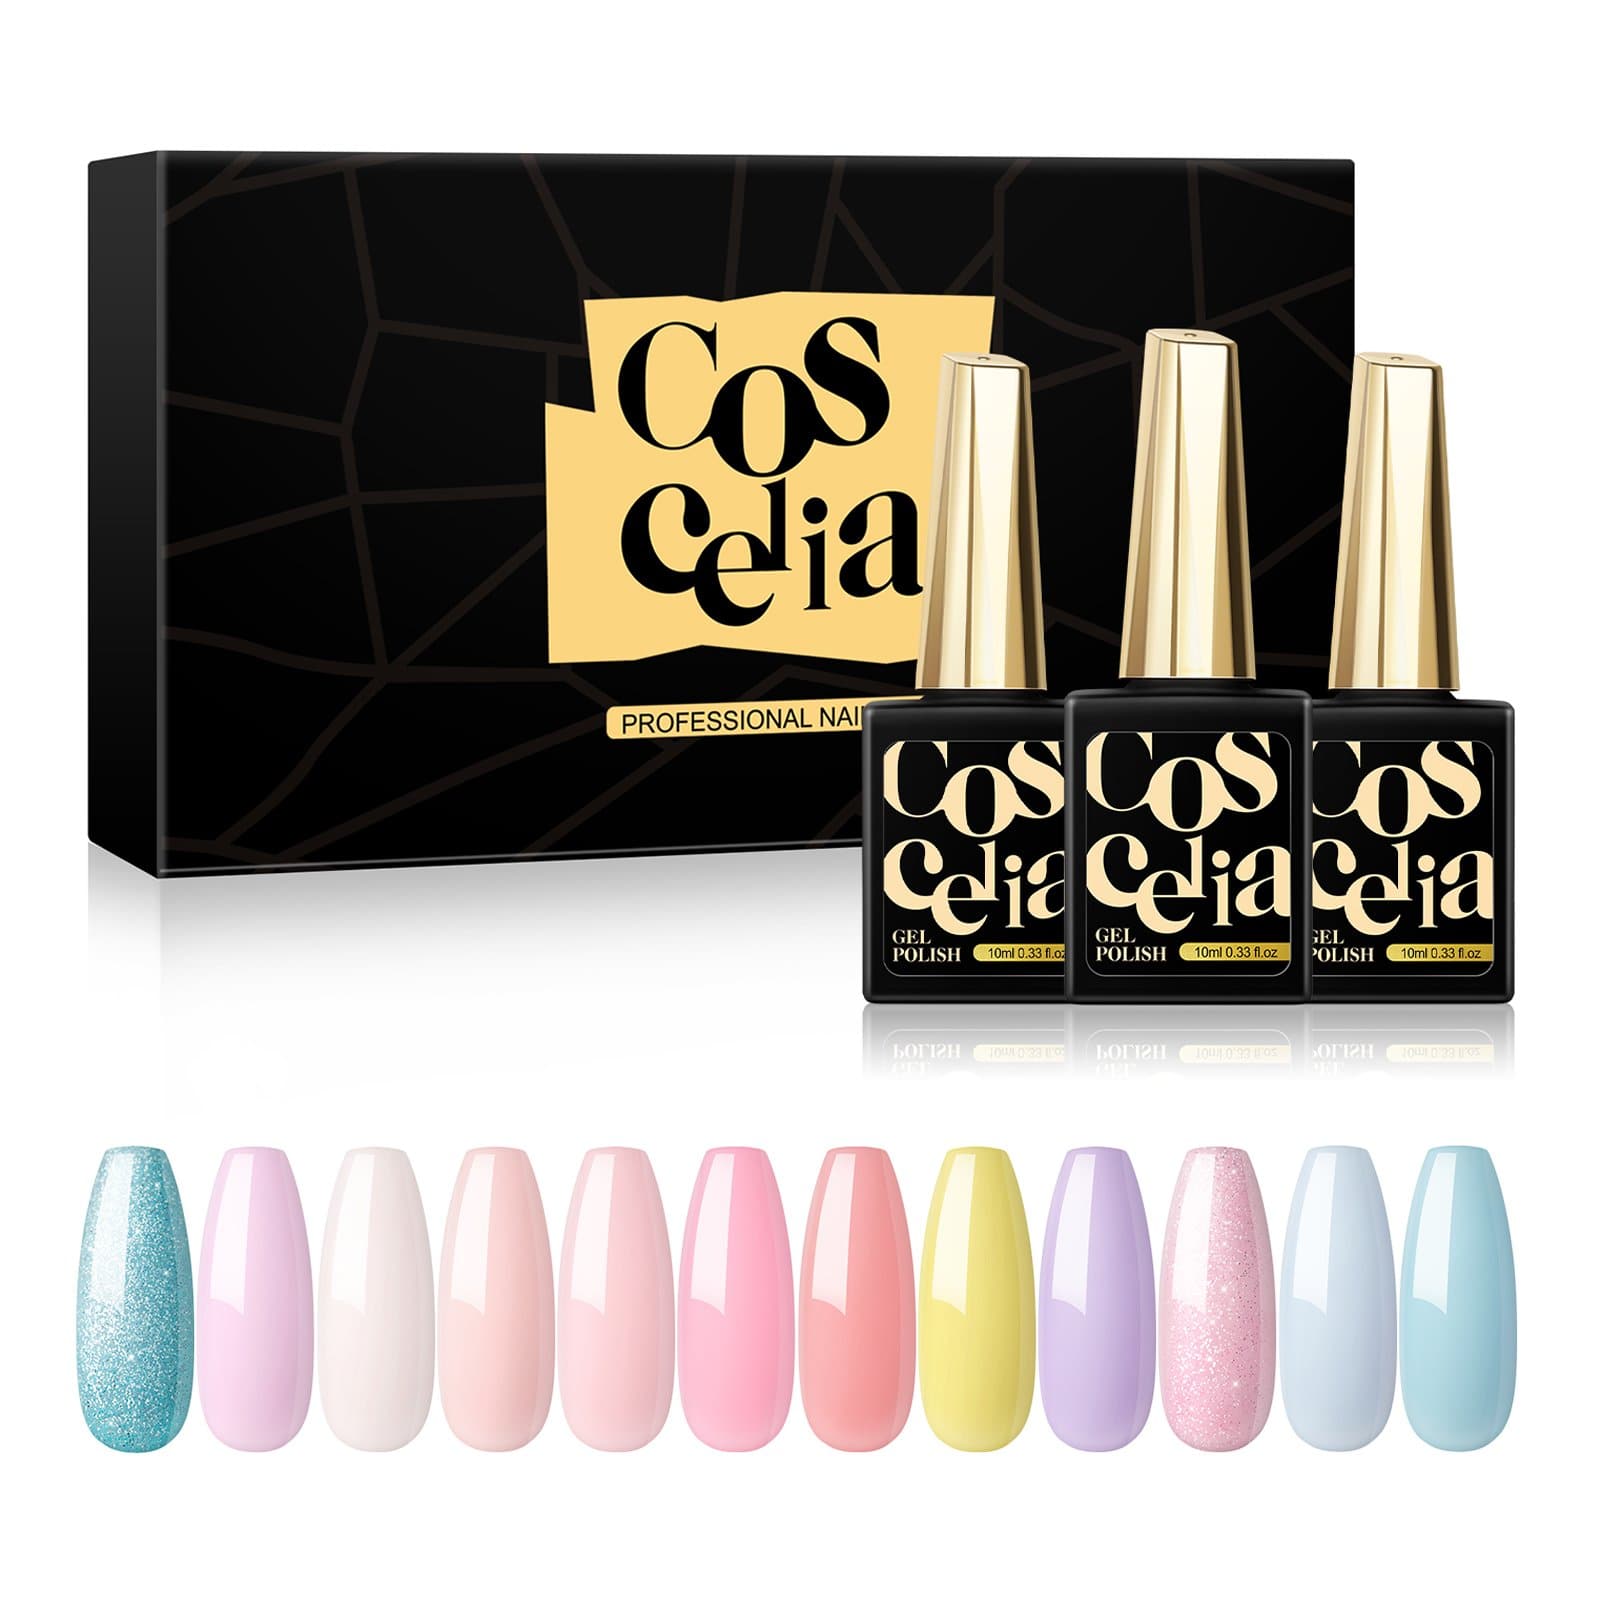 Coscelia Gel Nails Trending Set| Free Shipping| Manicure